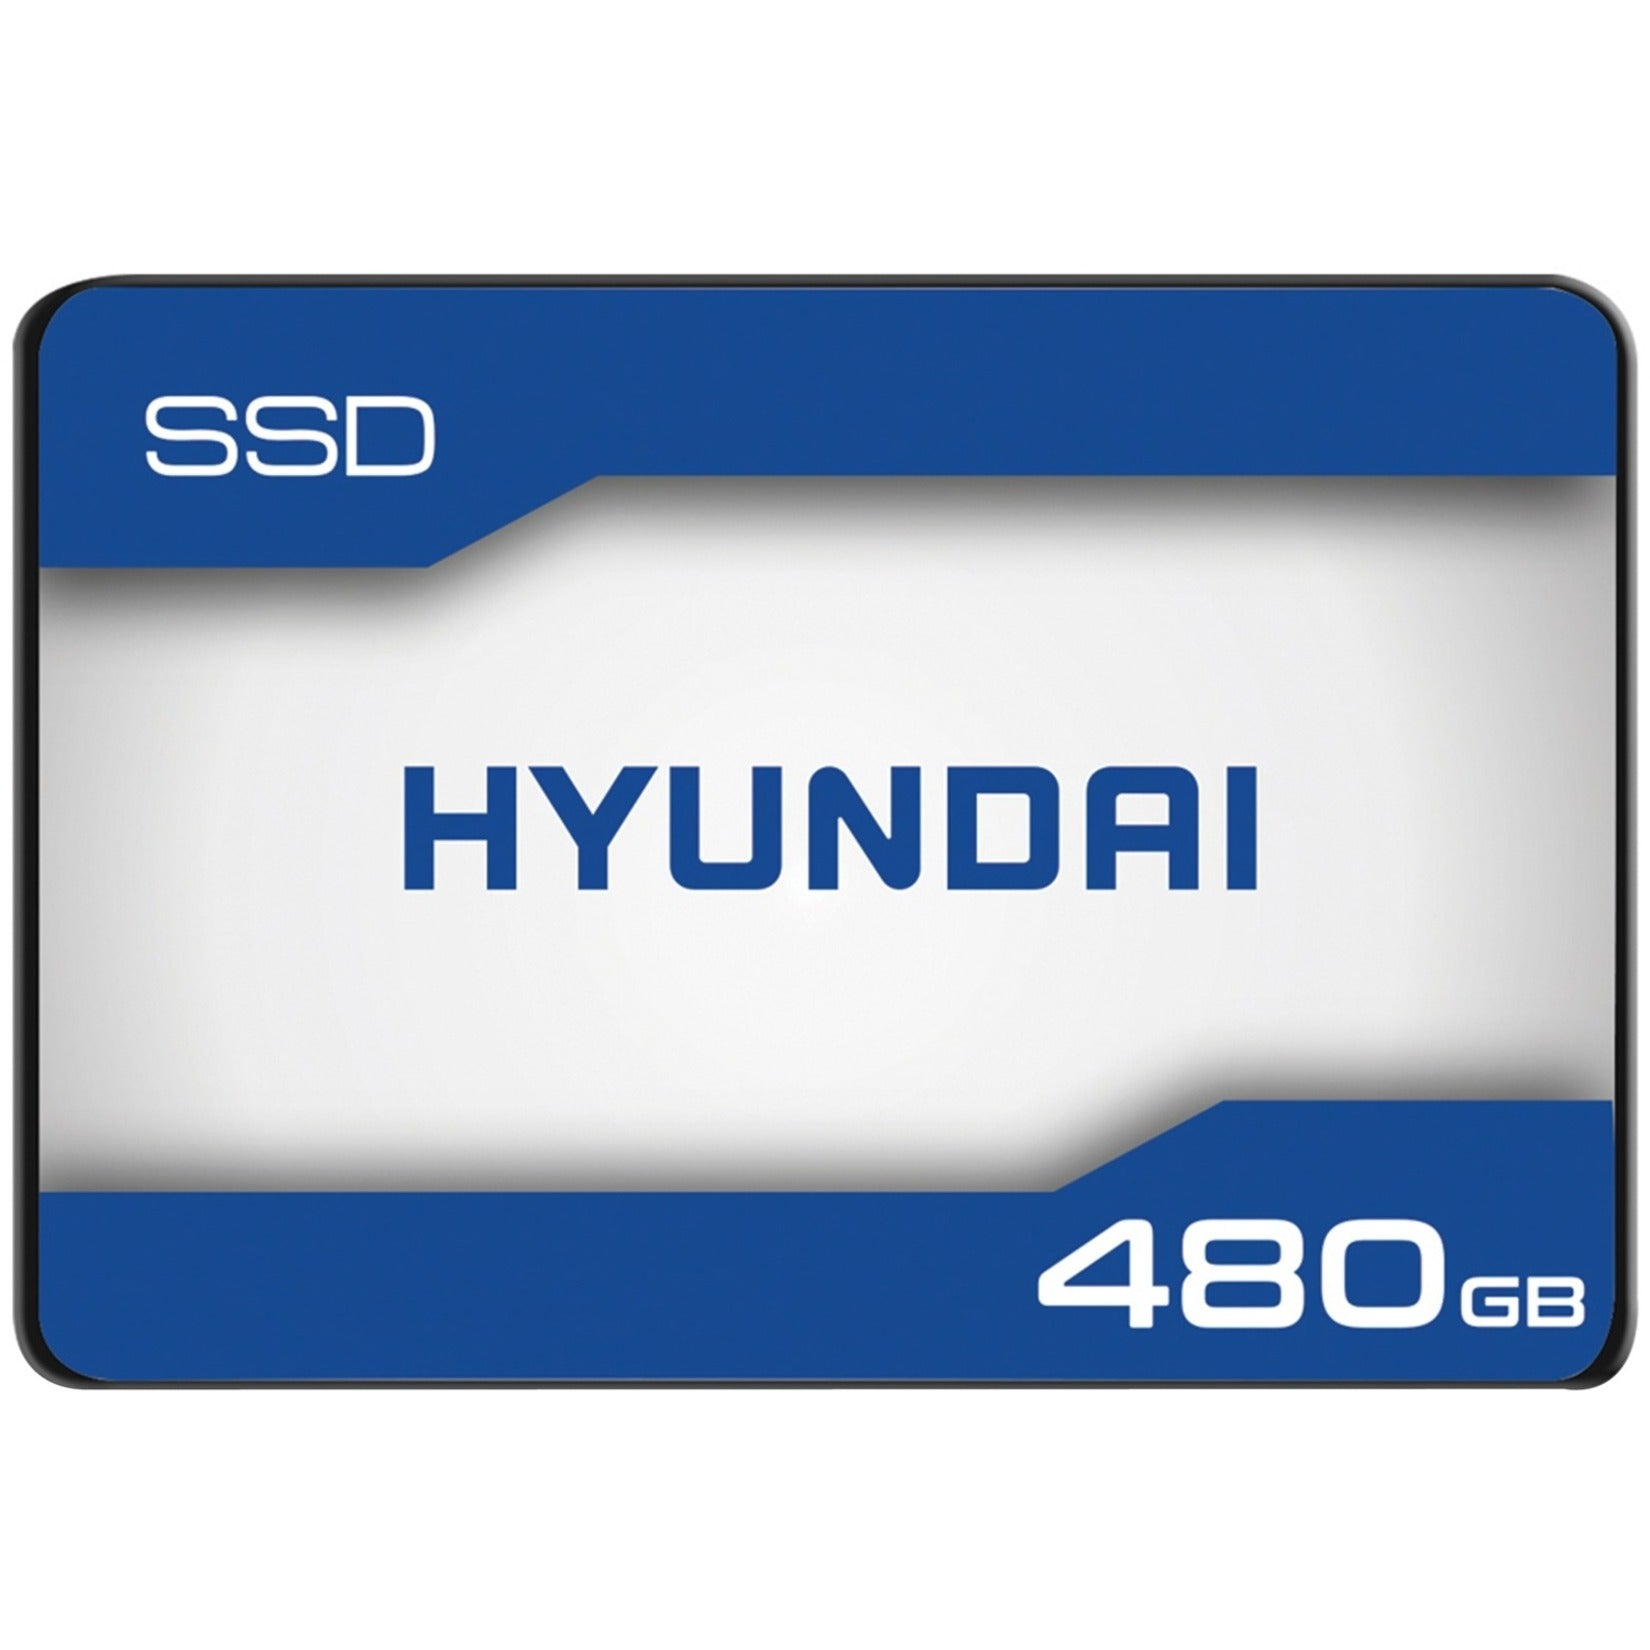 Hyundai 480GB SATA 3D TLC 2.5" Internal PC SSD, Advanced 3D NAND Flash, Up to 550/470 MB/s (C2S3T/480G) Main image